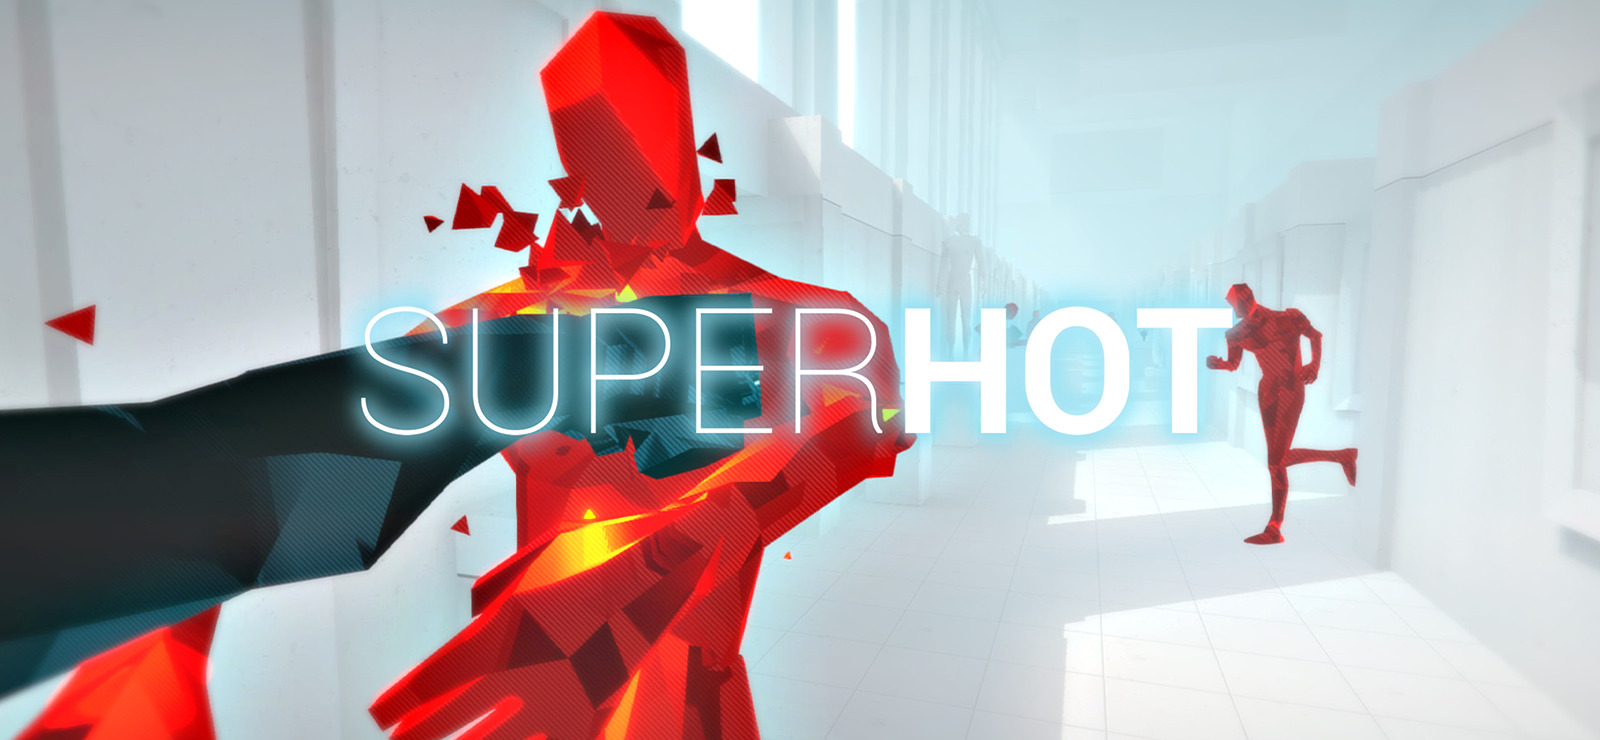 Superhot free. download full Game Mac